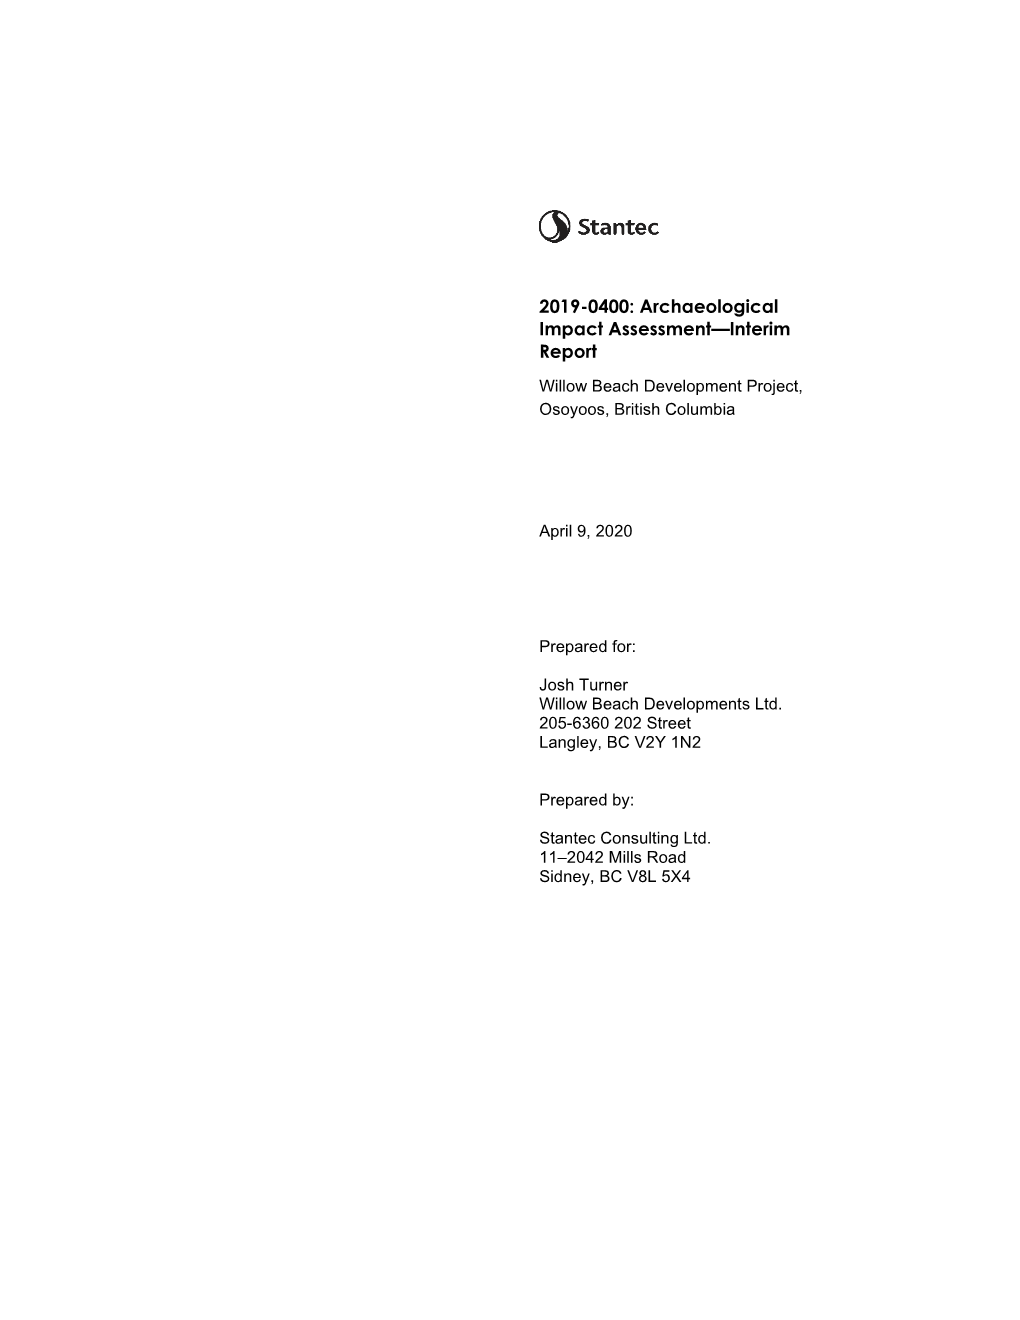 2019-0400: Archaeological Impact Assessment—Interim Report